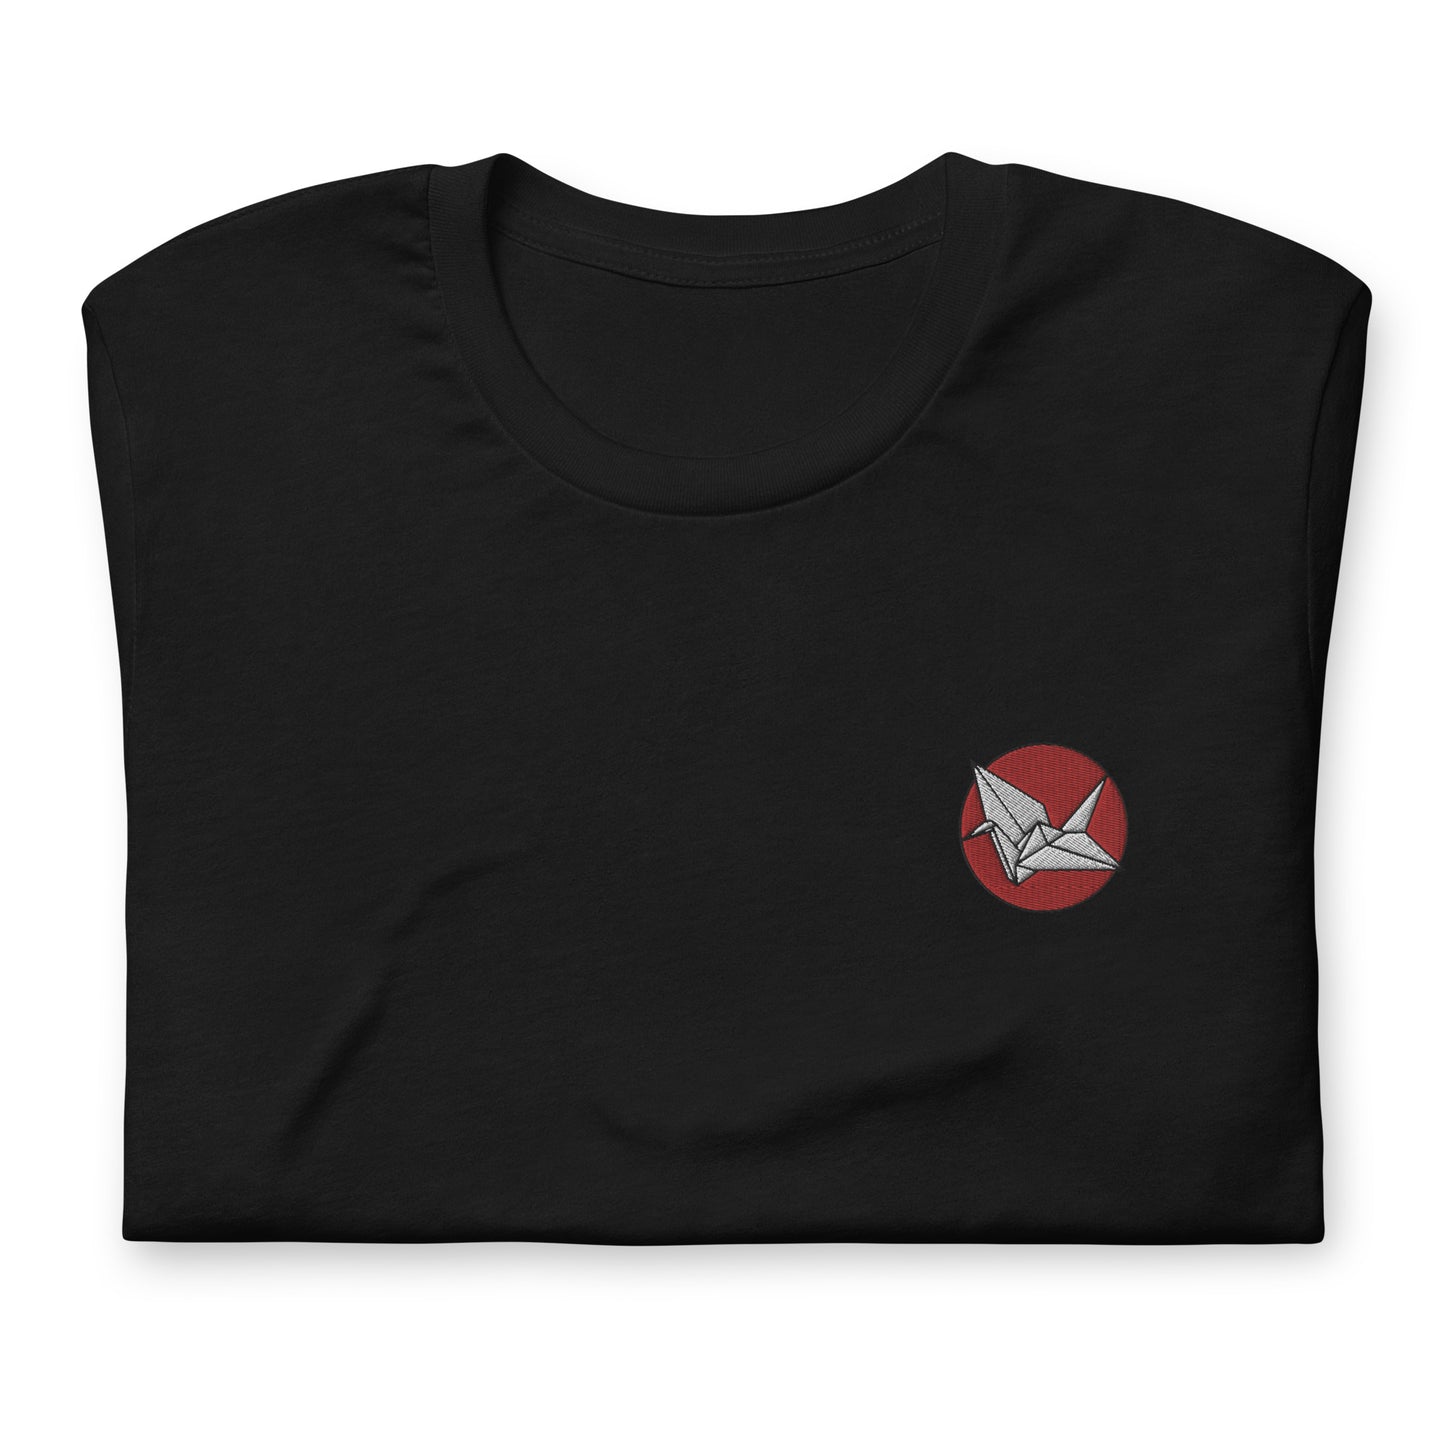 NOMADA Origami Crane embroidered t-shirt, Black color shirt.